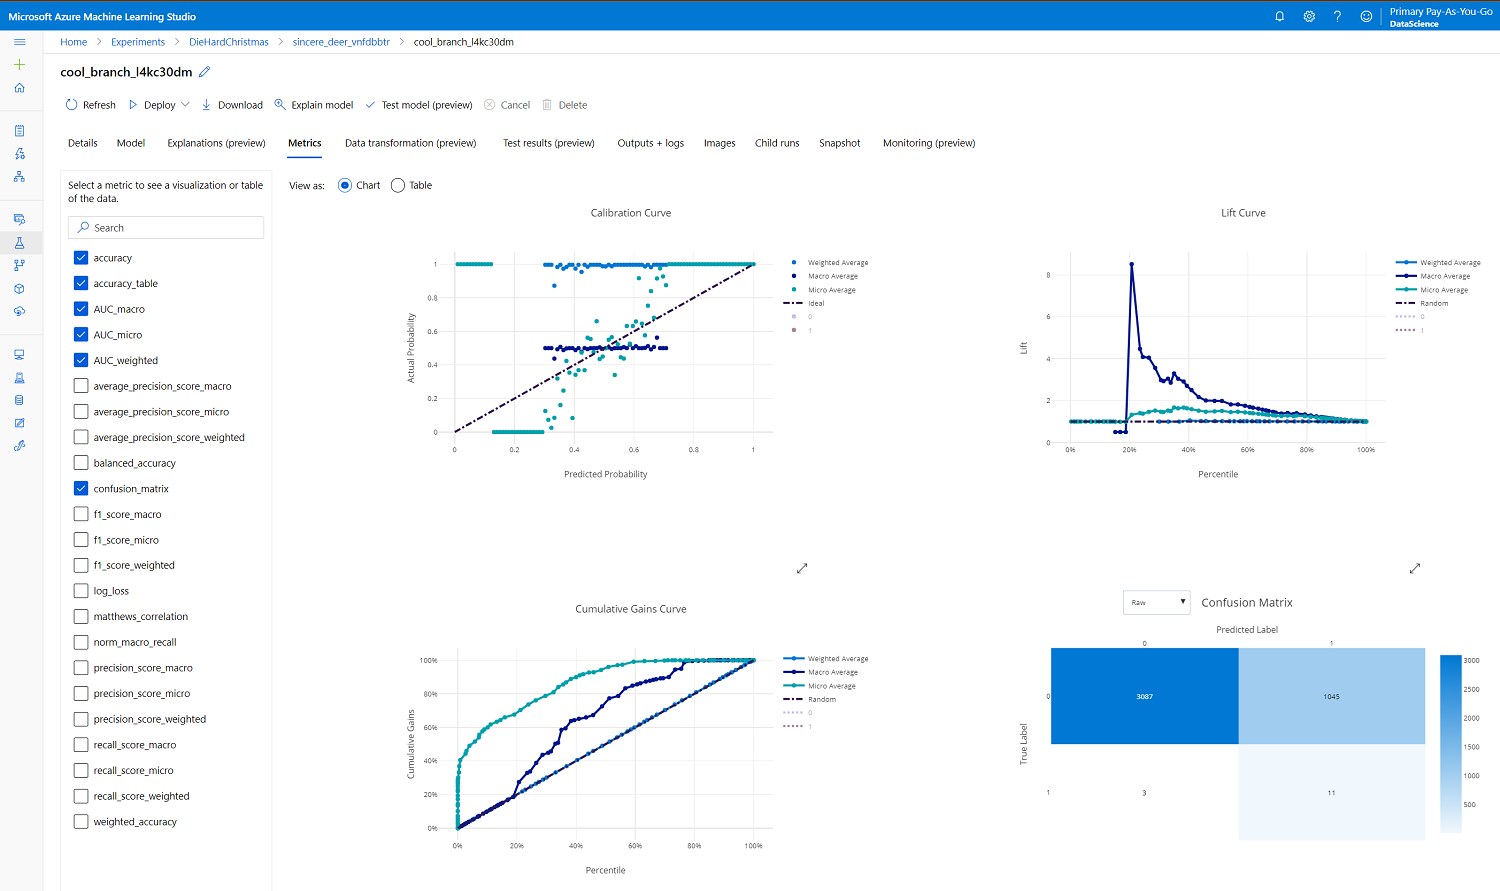 Data Science Metrics in Microsoft Azure